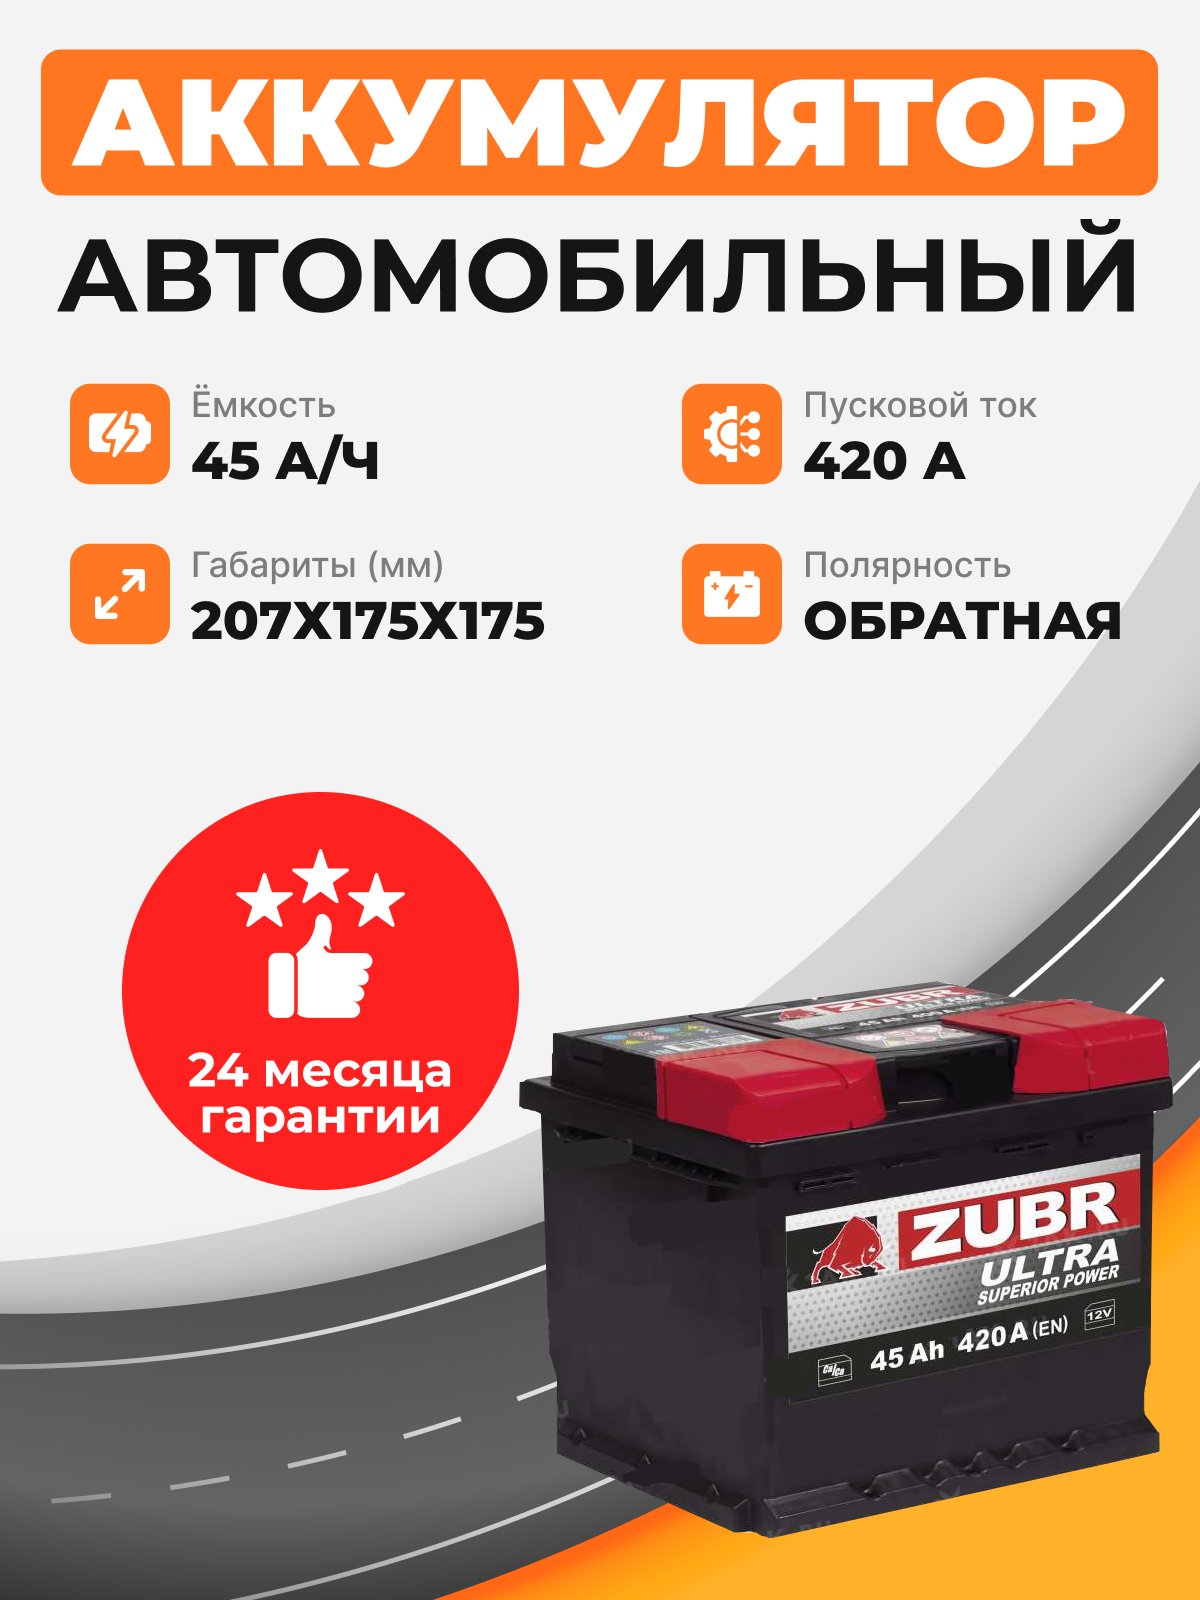          Аккумулятор ZUBR ULTRA 45 Ah о.п. старт ток 420 А низкий